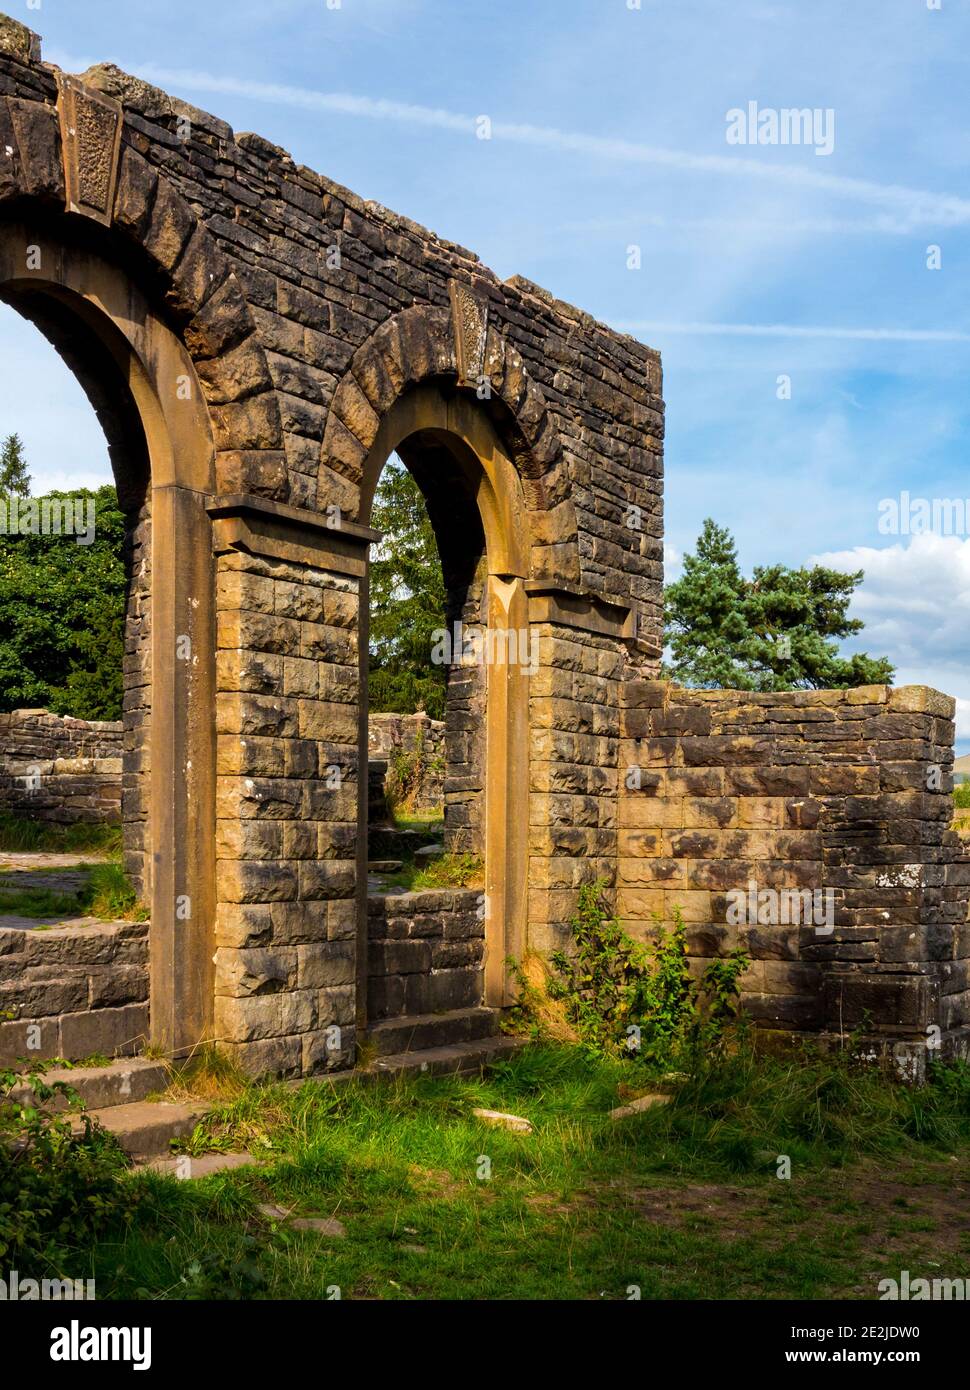 Ruins of Errwood Hall in the Upper Goyt Valley Derbyshire England UK built in 1830s by Samuel Grimshawe but demolished when Errwood Reservoir built Stock Photo